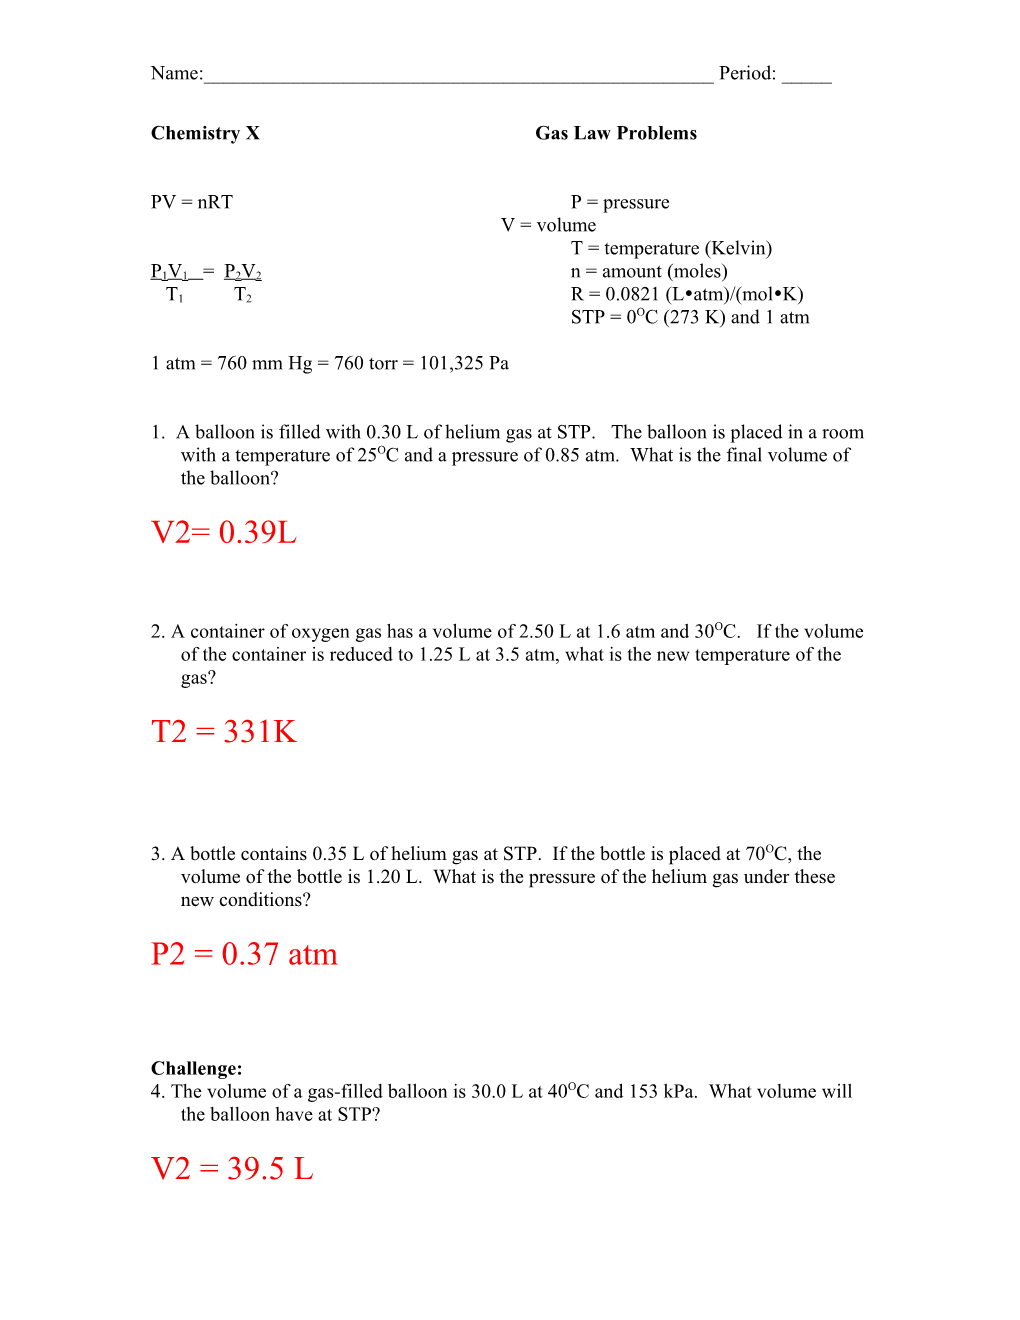 AP Chemistry Gas Law Problems